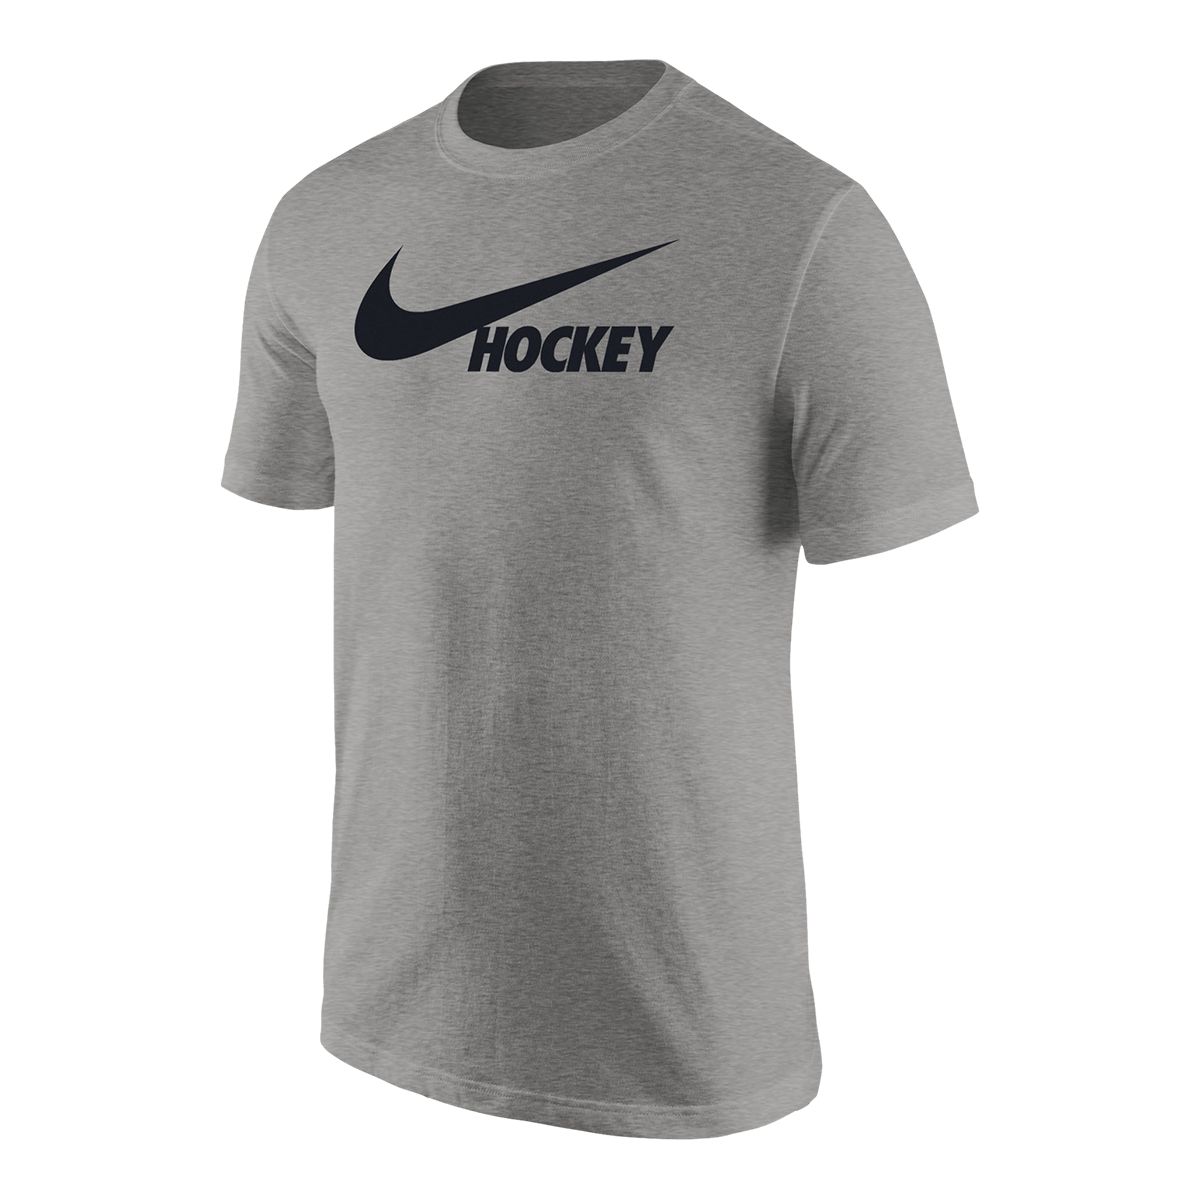 Image of NIke Men's Bishop Cotton School Cotton Hockey T Shirt